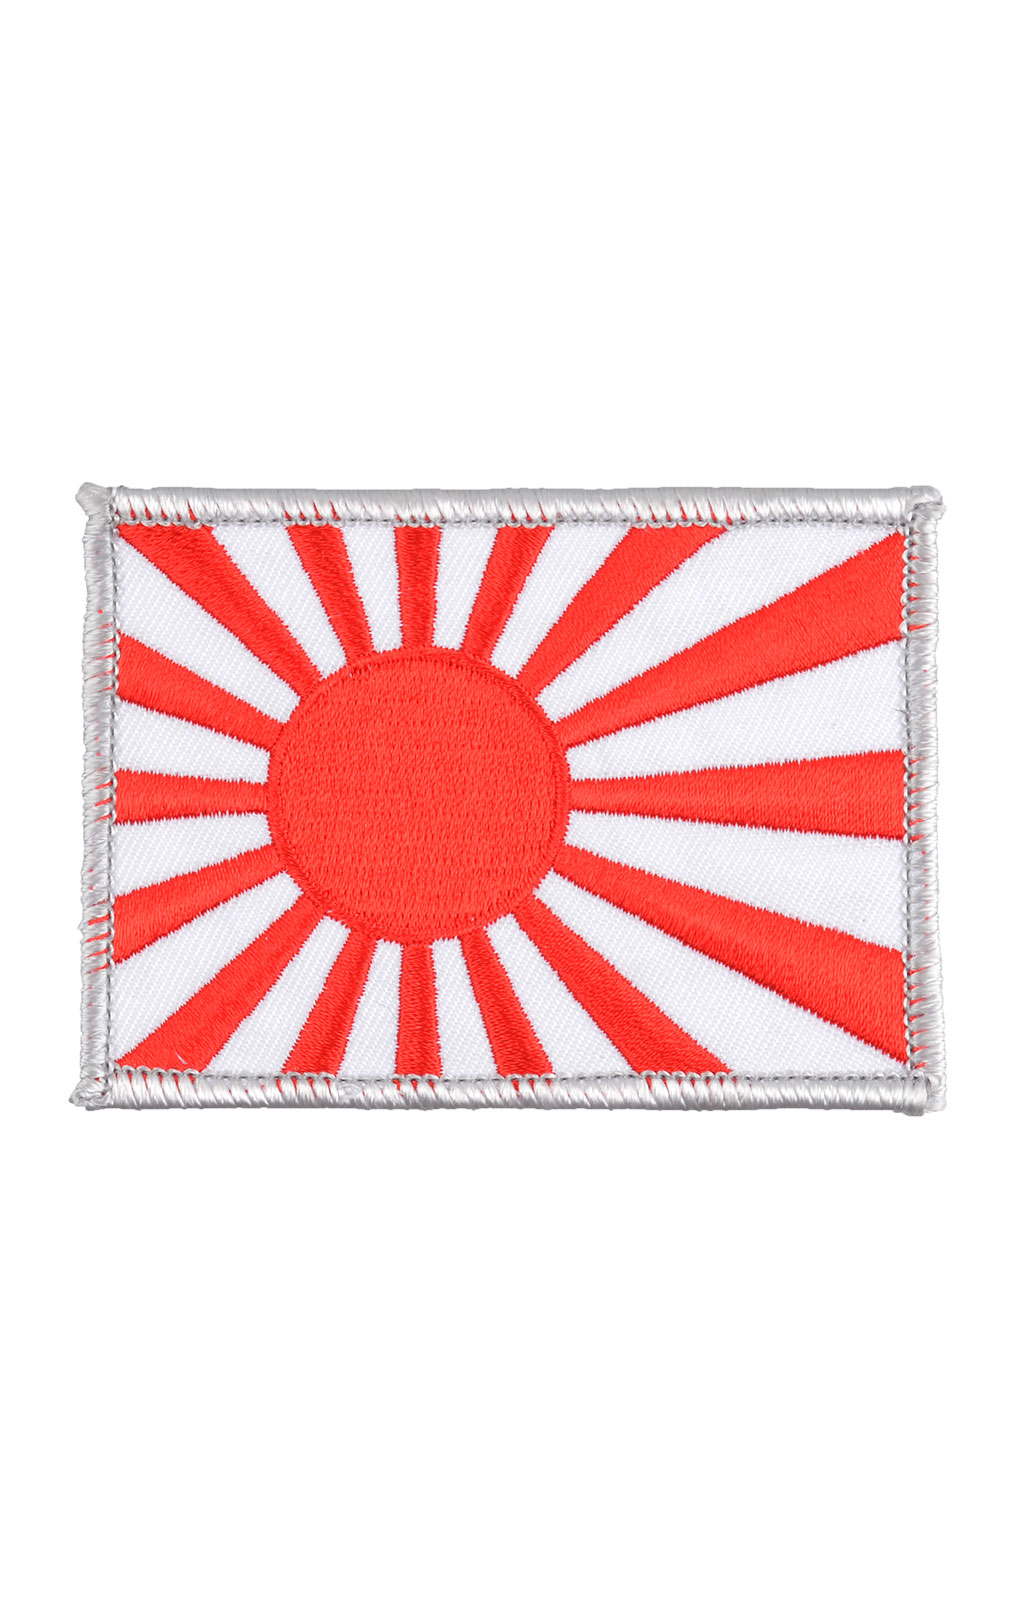 Нашивка флажок JAPAN RISING SUN (PM3859) 